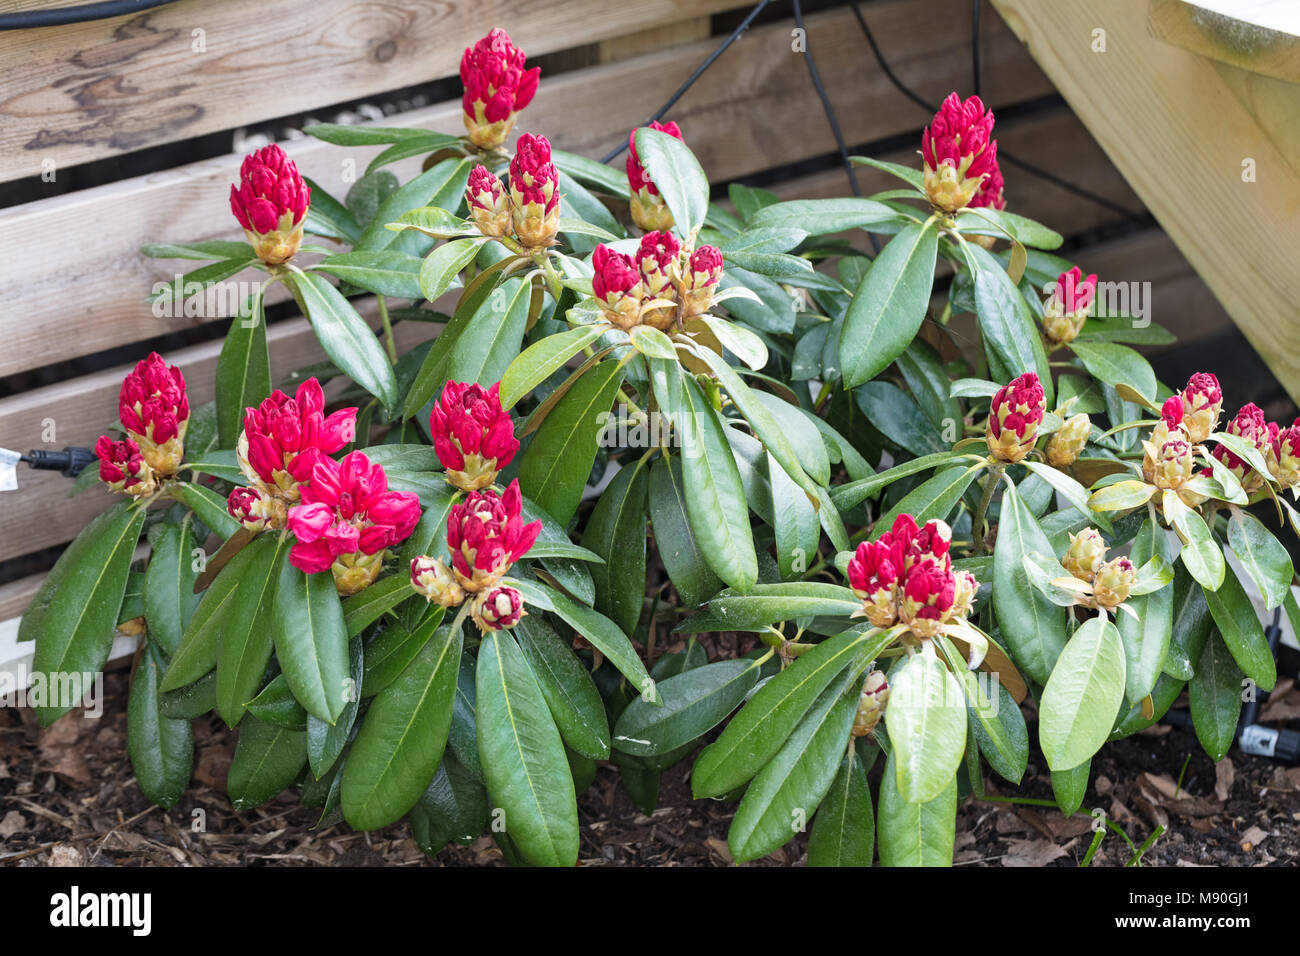 'Morgenrot' Yakushima rhododendron, Praktrododendron (Rhododendron Yakushimanum) Stock Photo